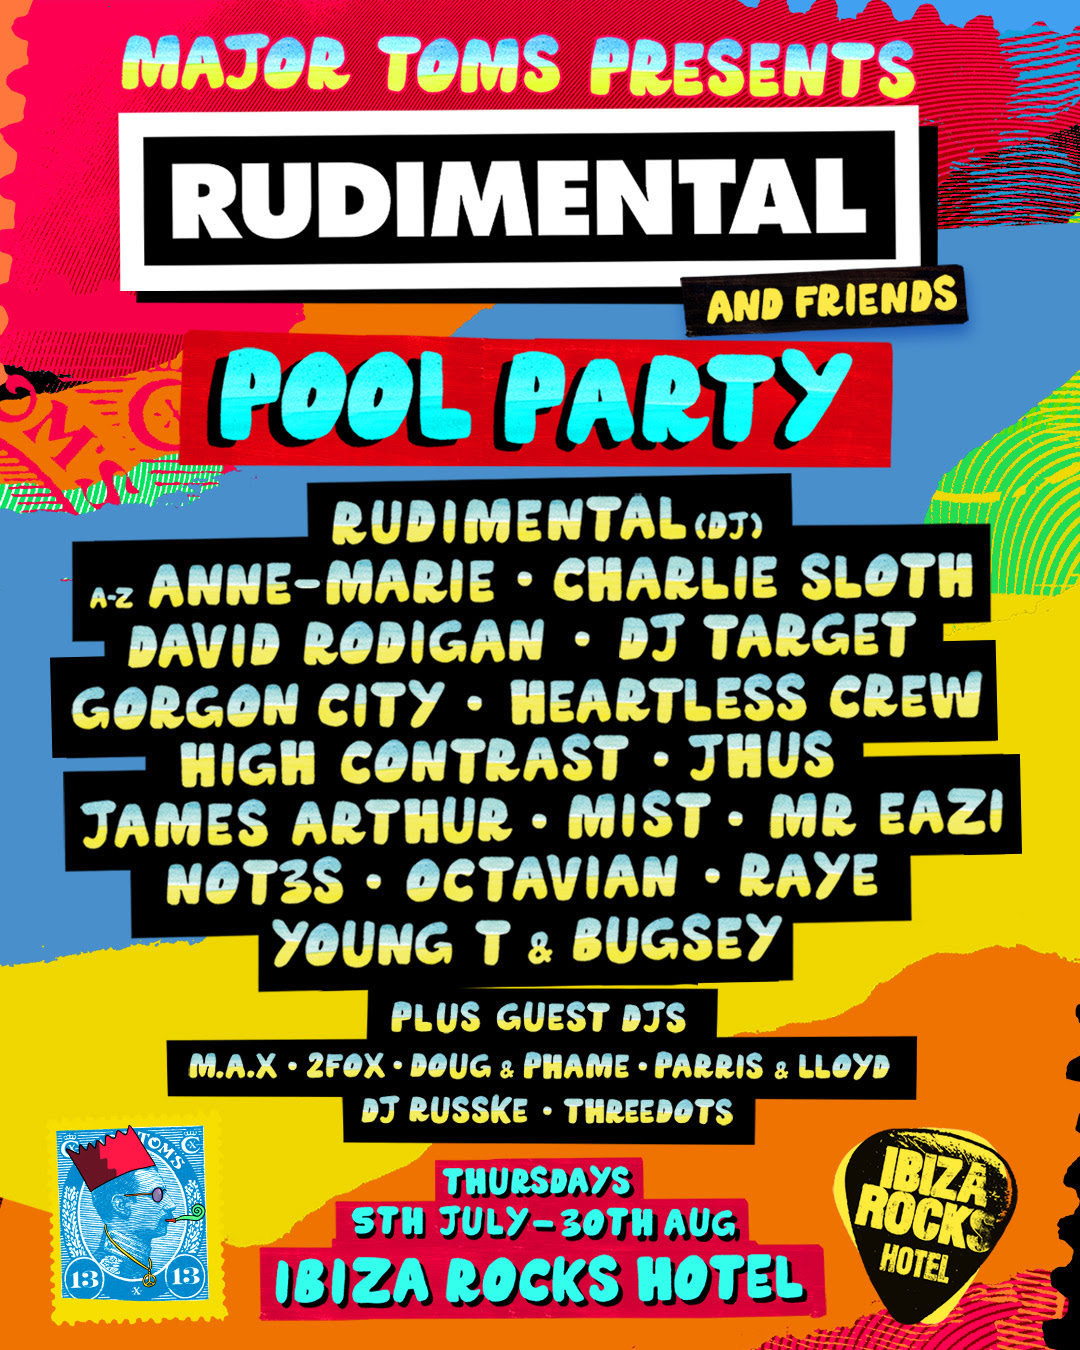 Rudimental and friends at Ibiza Rocks Hotel